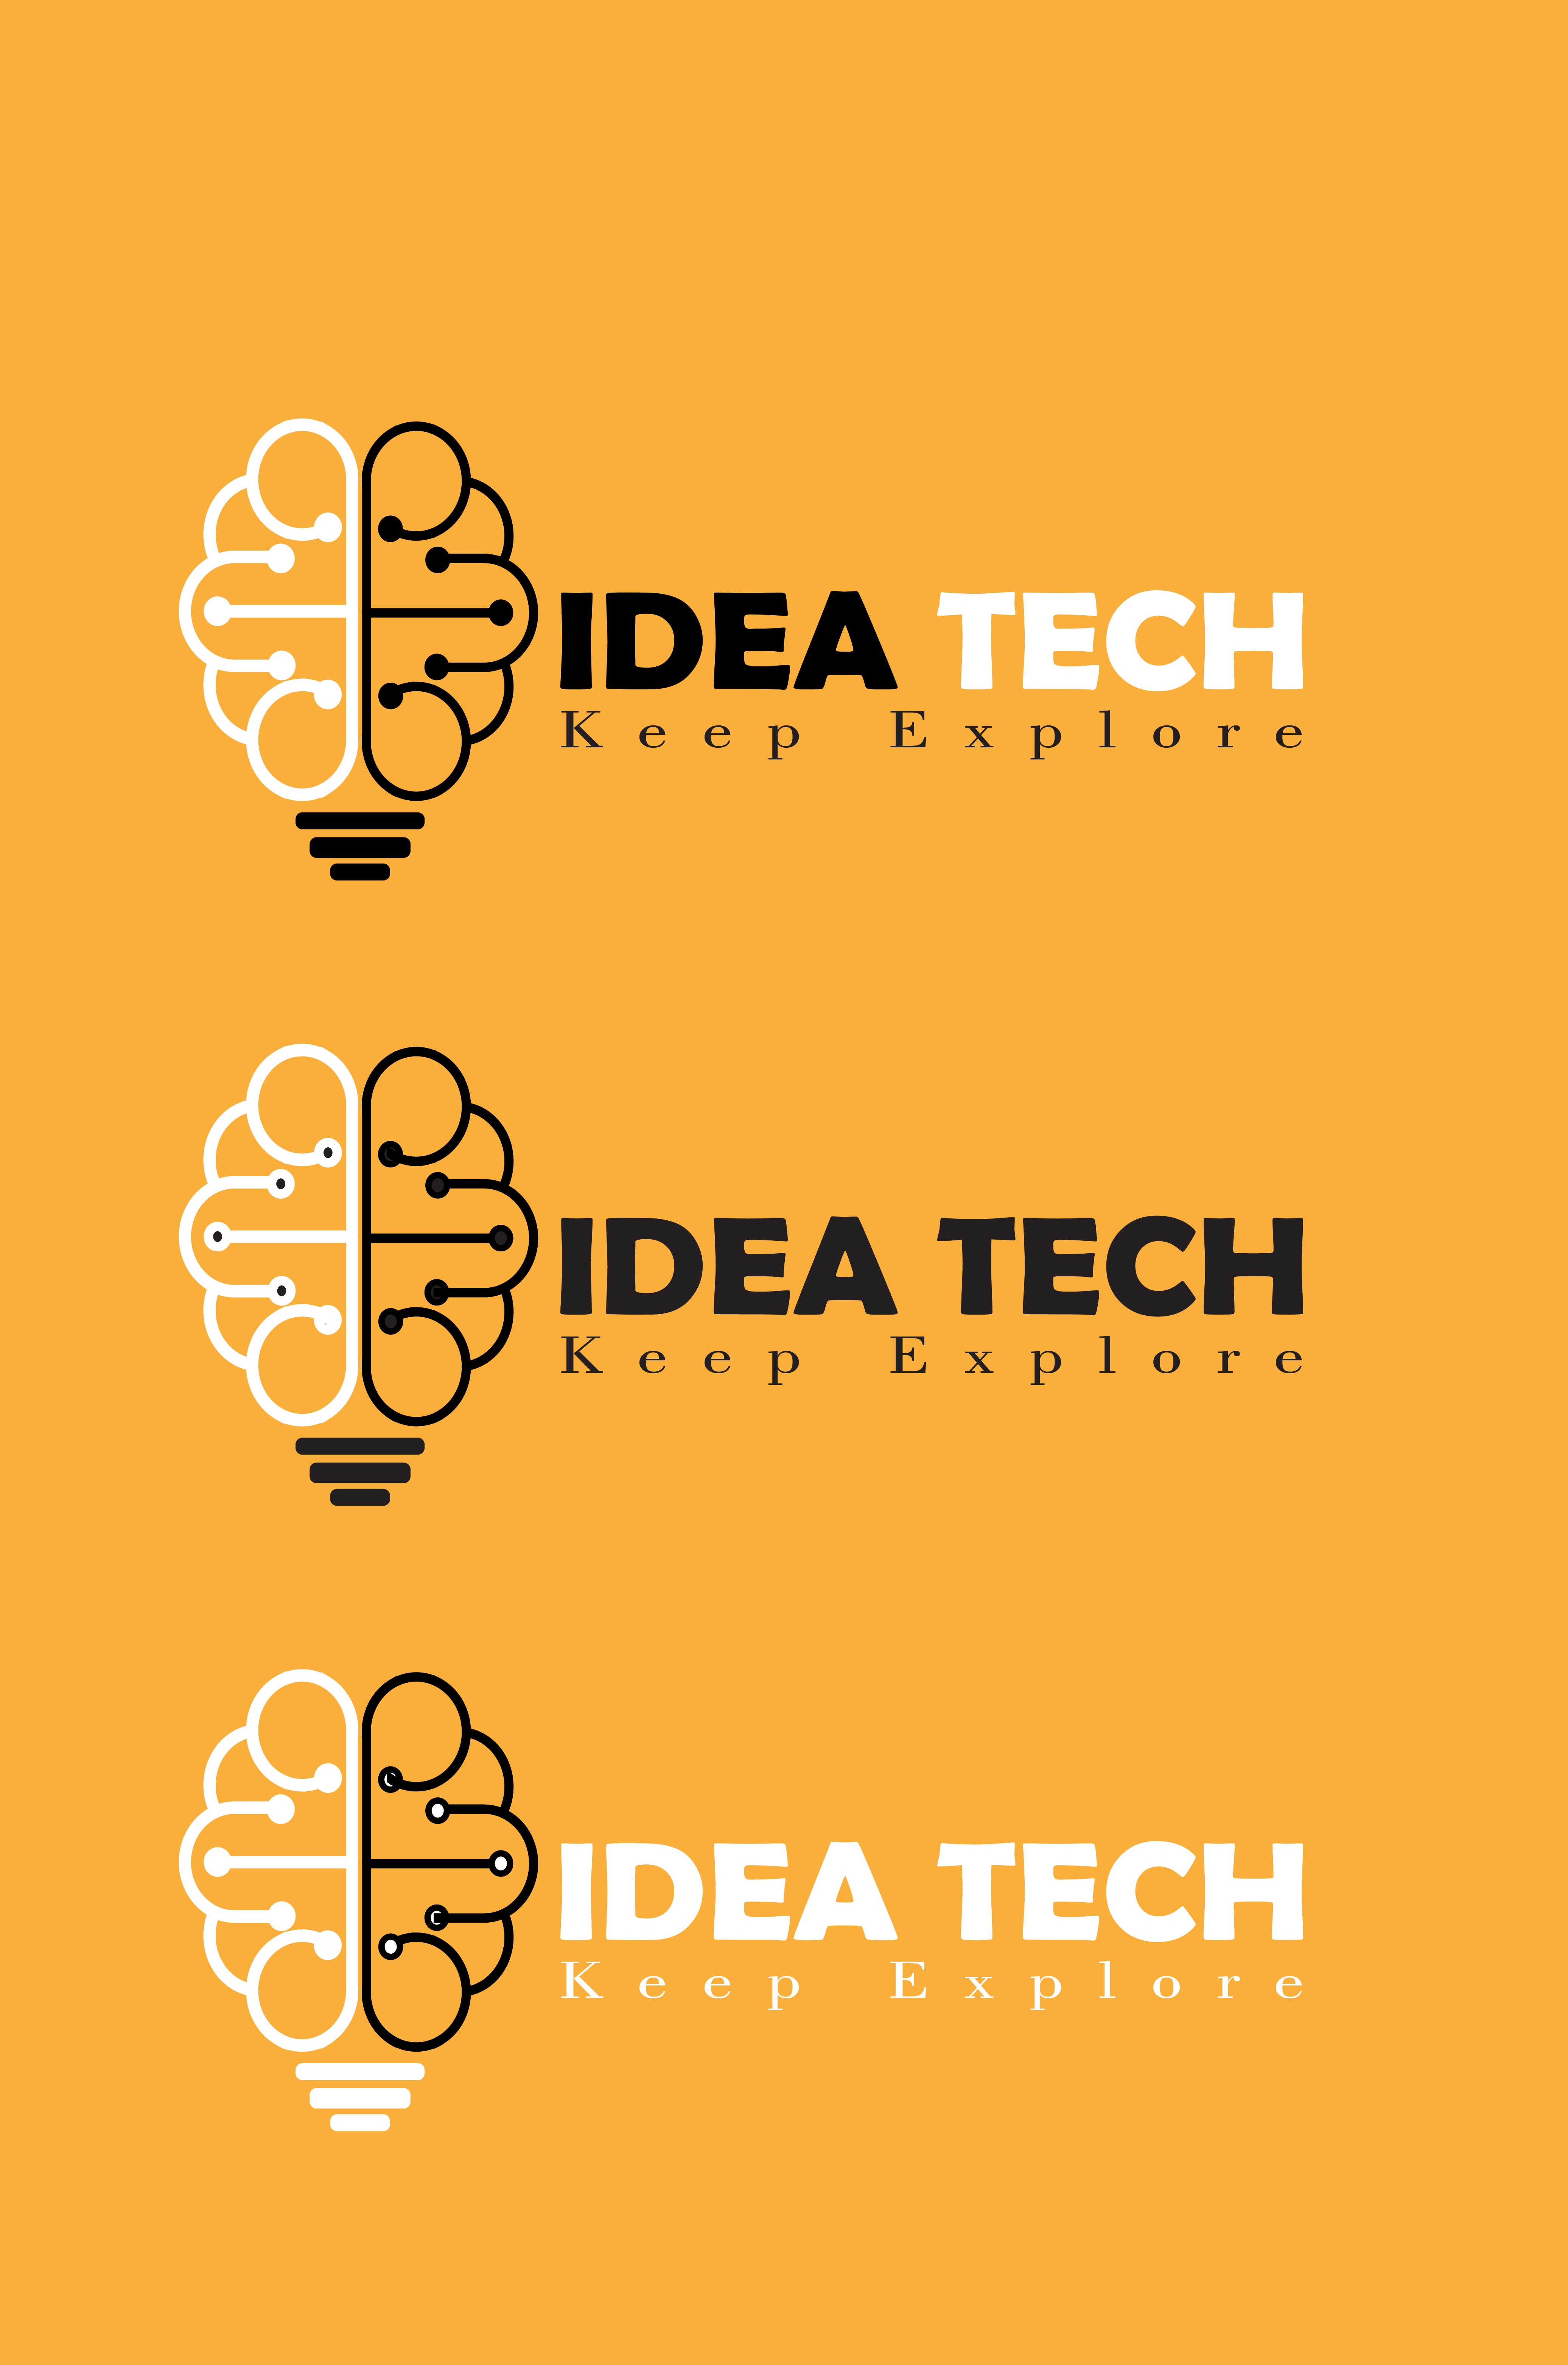 High Tech Company Logo Design Minimal Design For Business pinterest preview image.